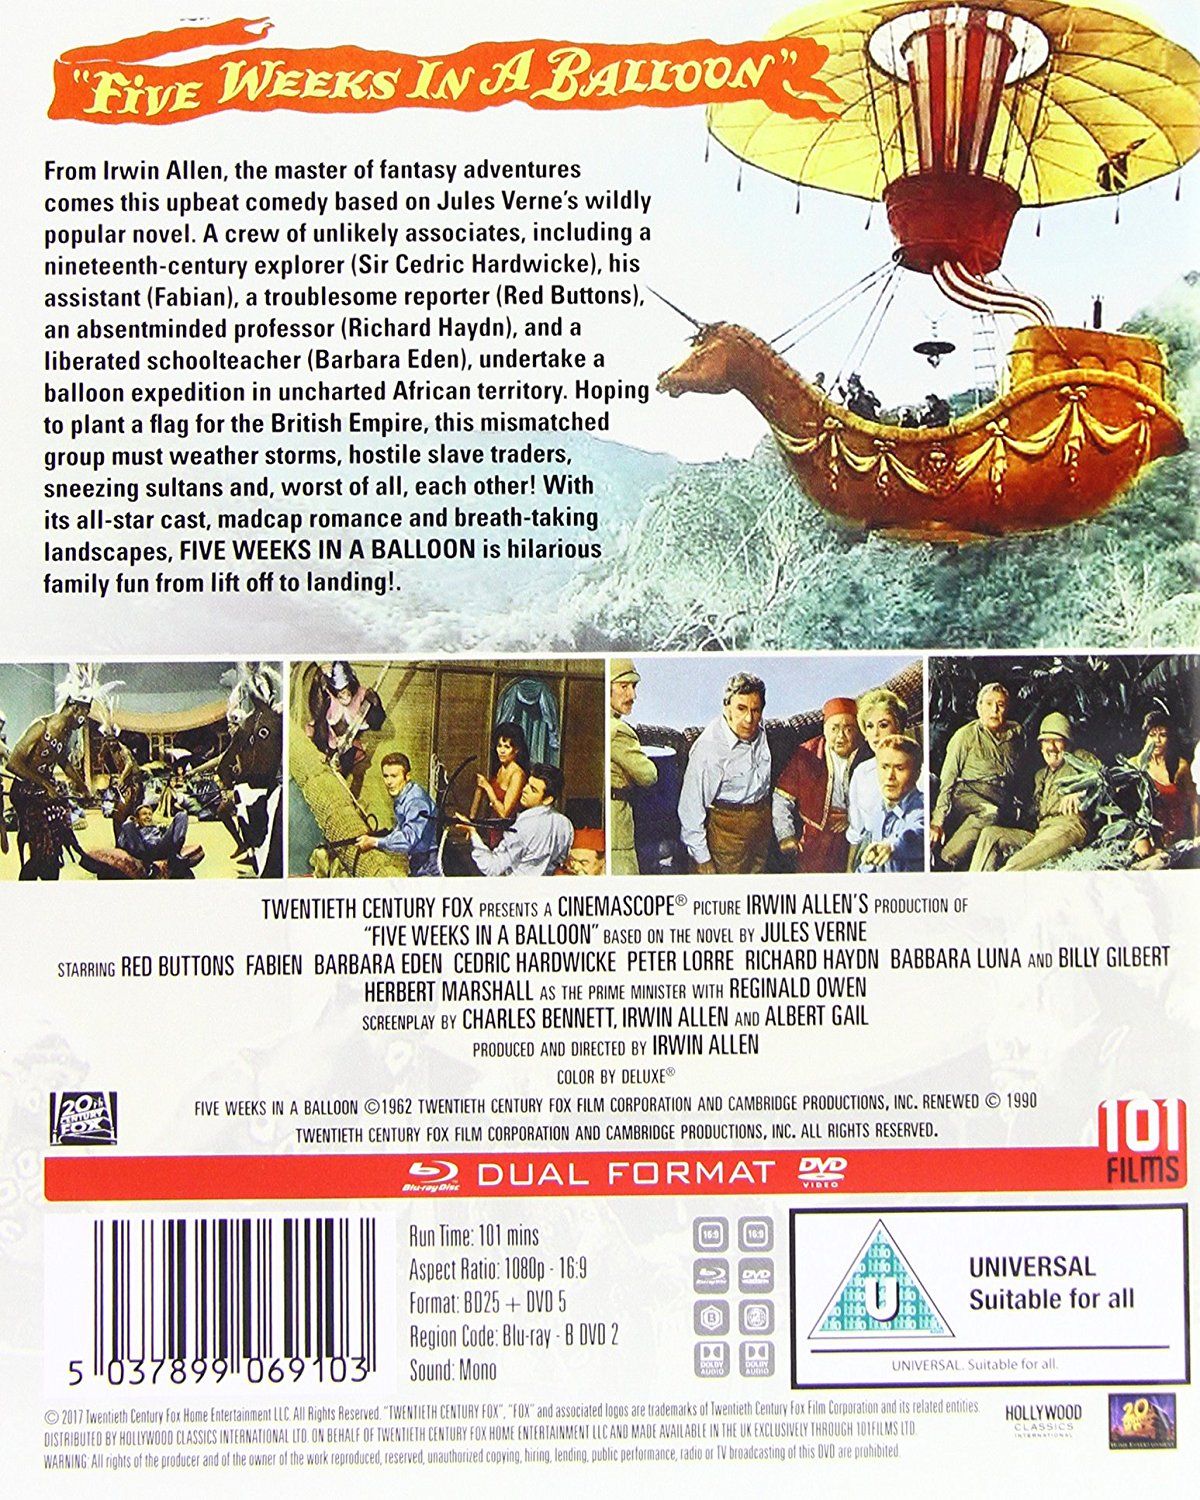 Fabian در صحنه فیلم سینمایی Five Weeks in a Balloon به همراه سدریک هاردویک، BarBara Luna، Richard Haydn، Peter Lorre، رد باتنز و Barbara Eden